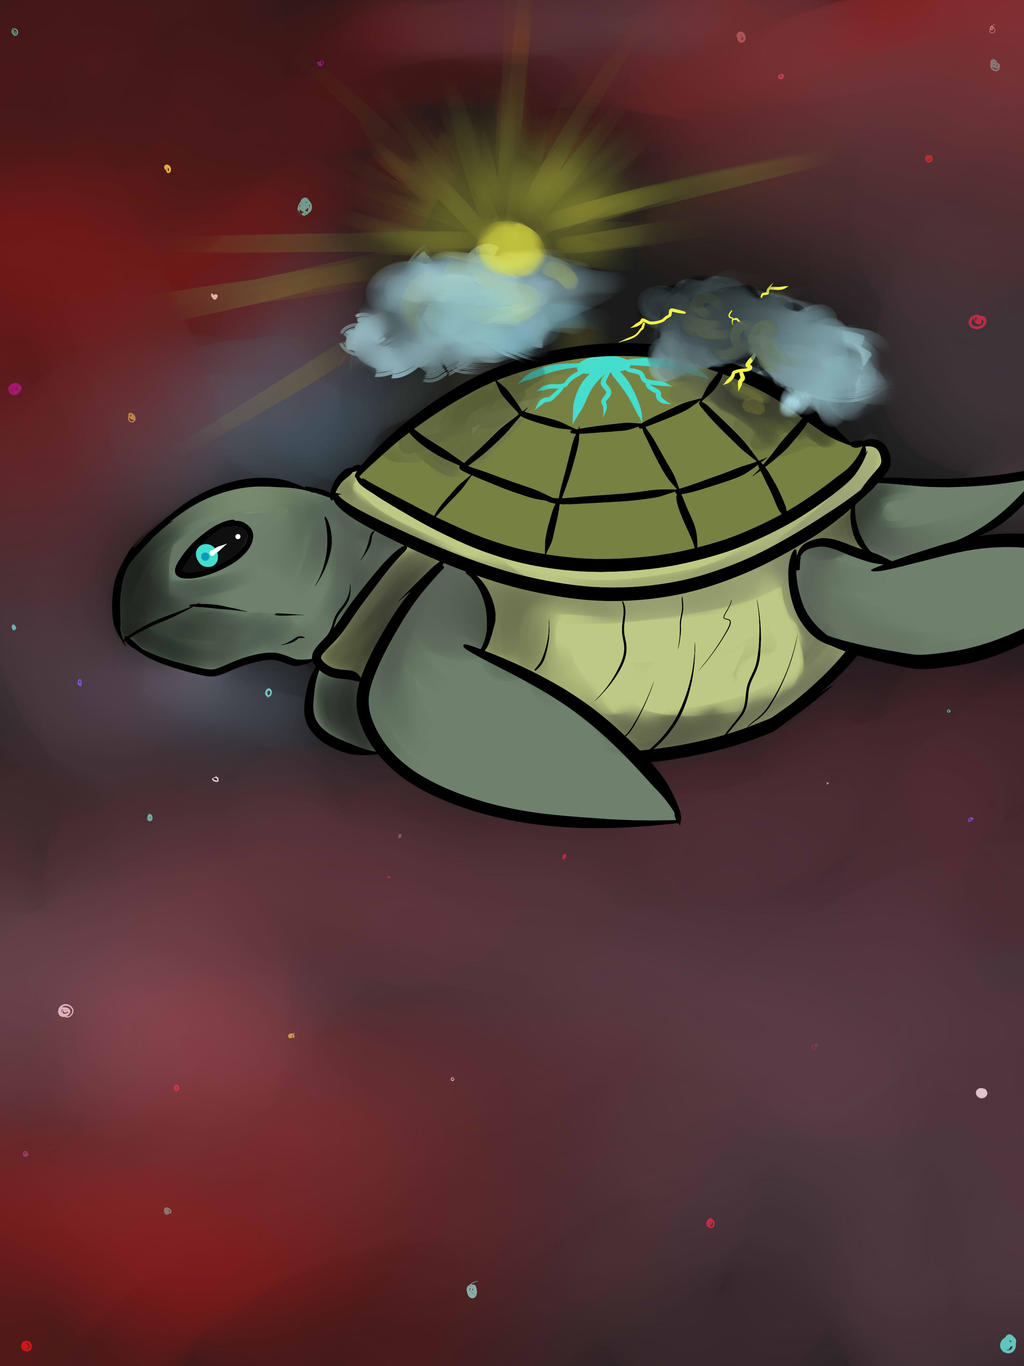 Turtle maturin, the Multiverse (Stephen